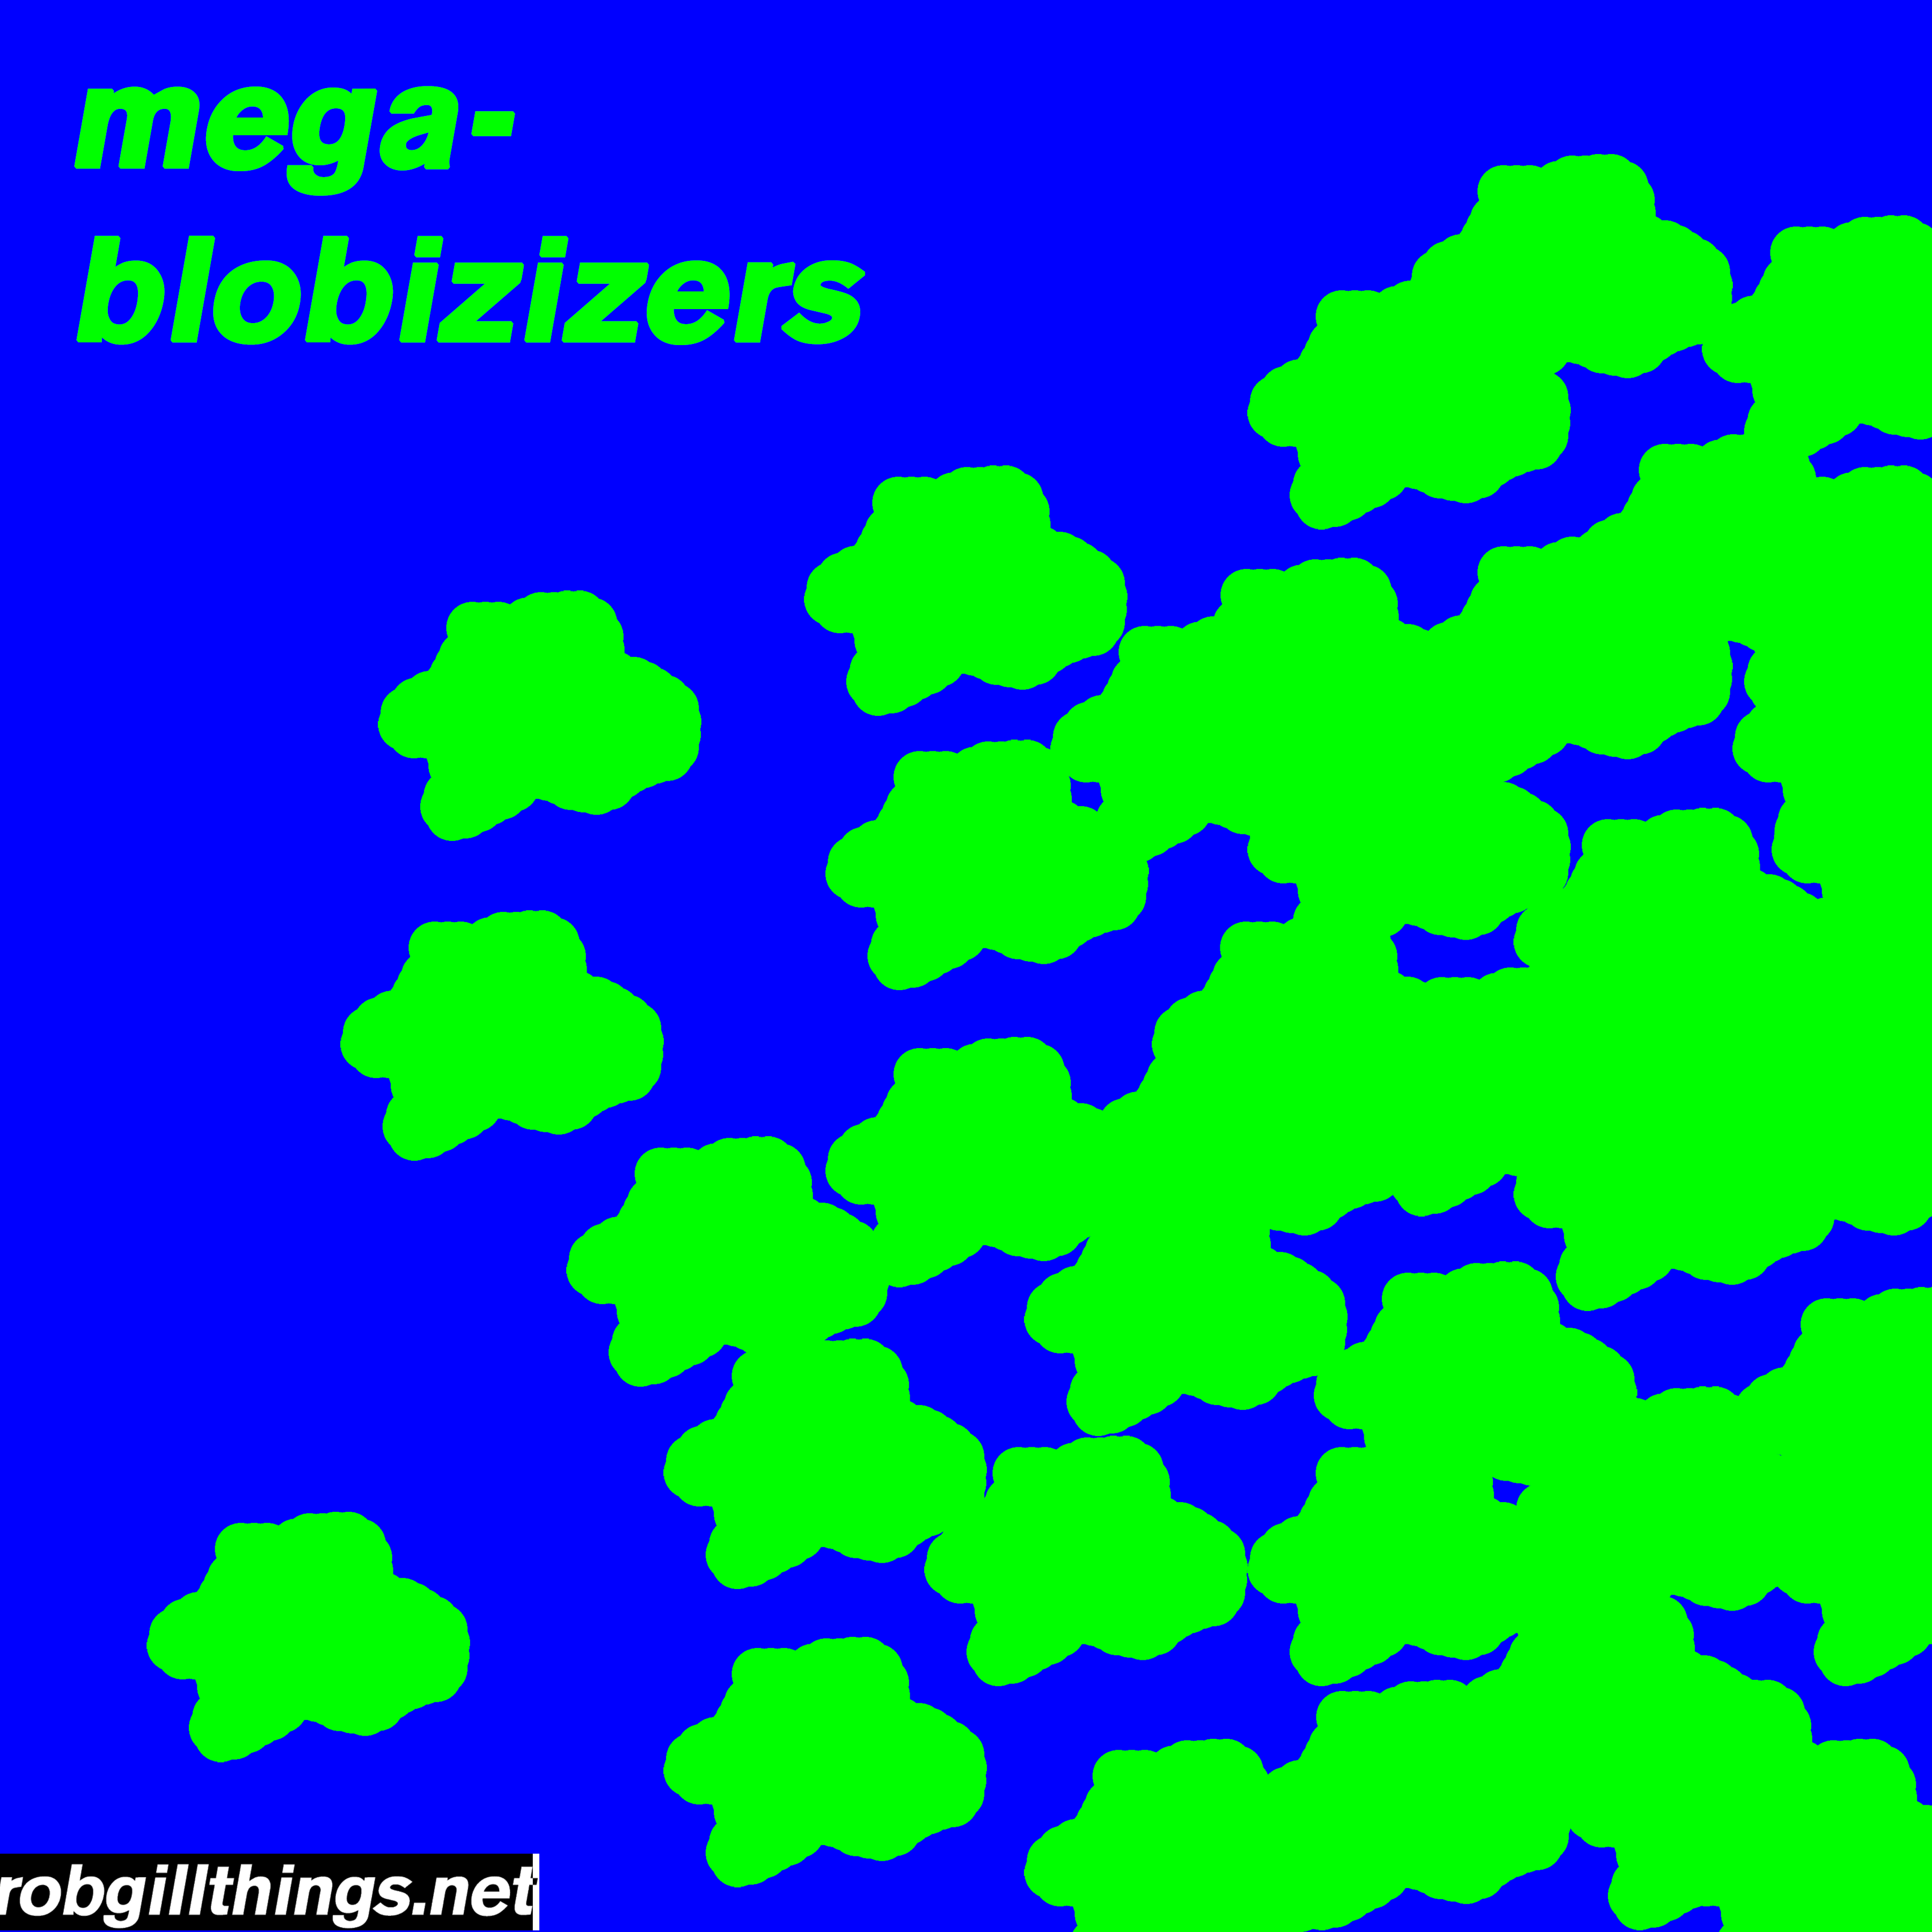 mega blobizizers - t-shirt